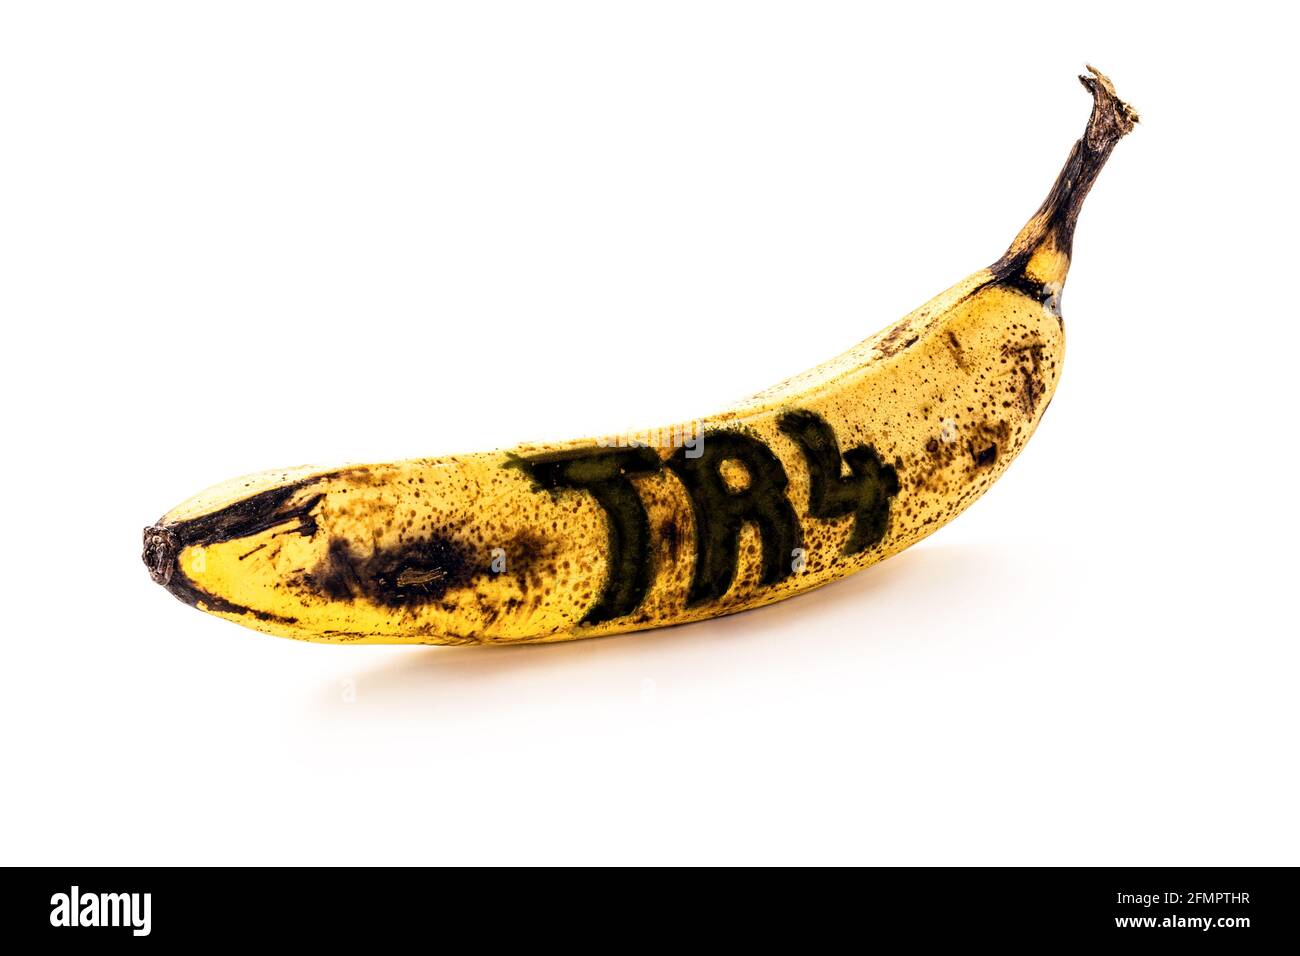 banana contaminated by Fusarium oxysporum fungus, called tr4, banana extinction risk. english text written TR 4 Stock Photo